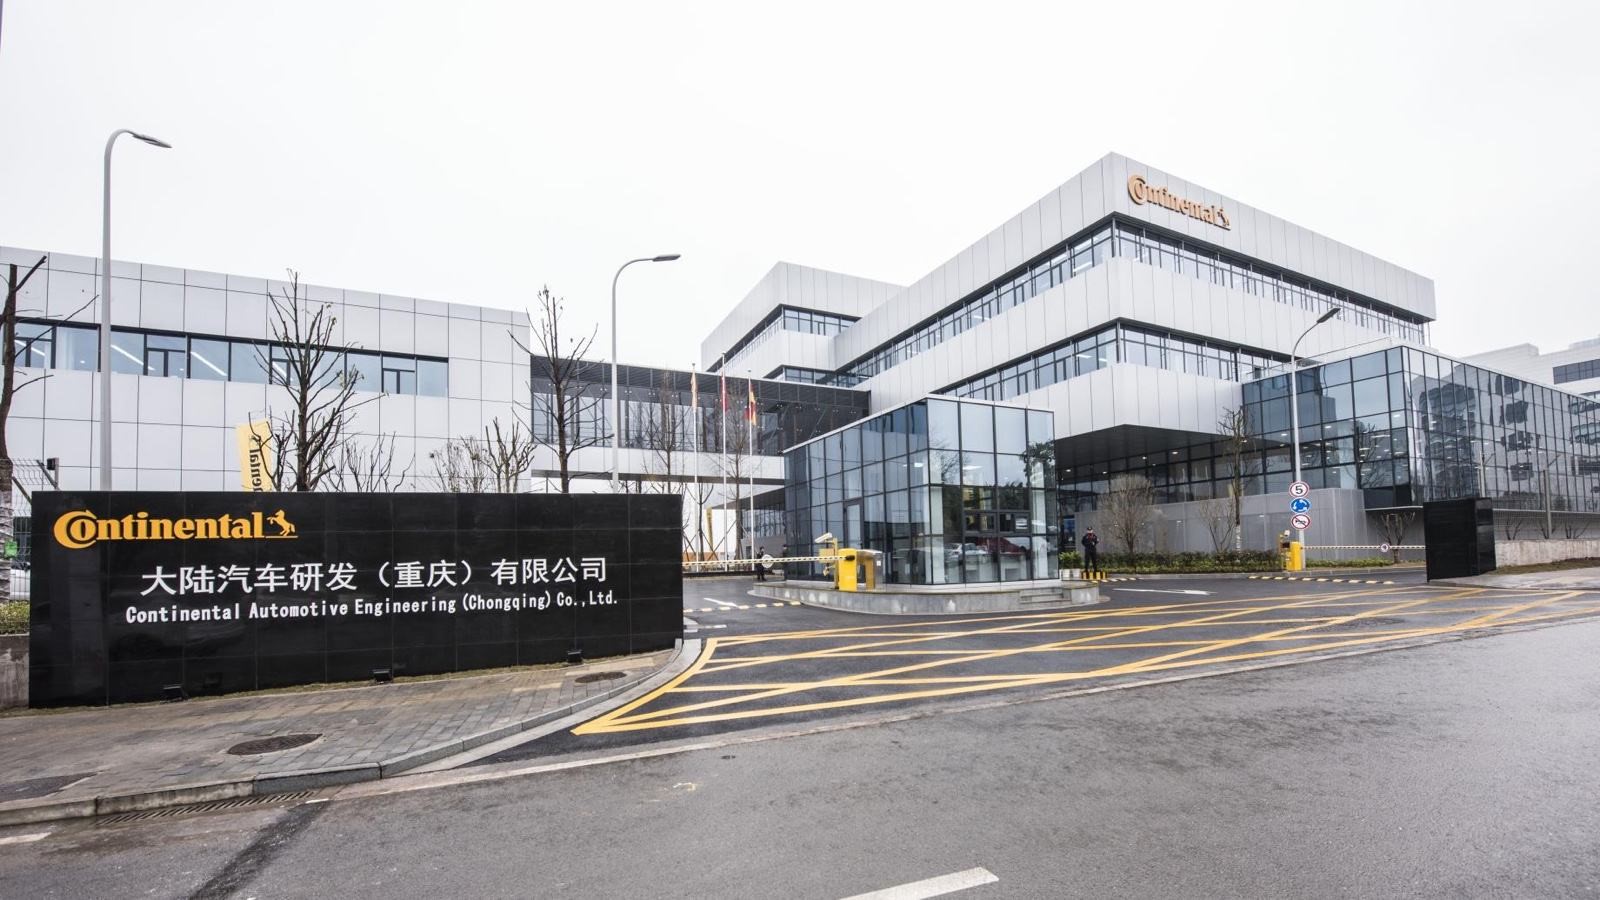 Mainland Automobile R&D (Chongqing) Co., Ltd. R&D Center Phase 1